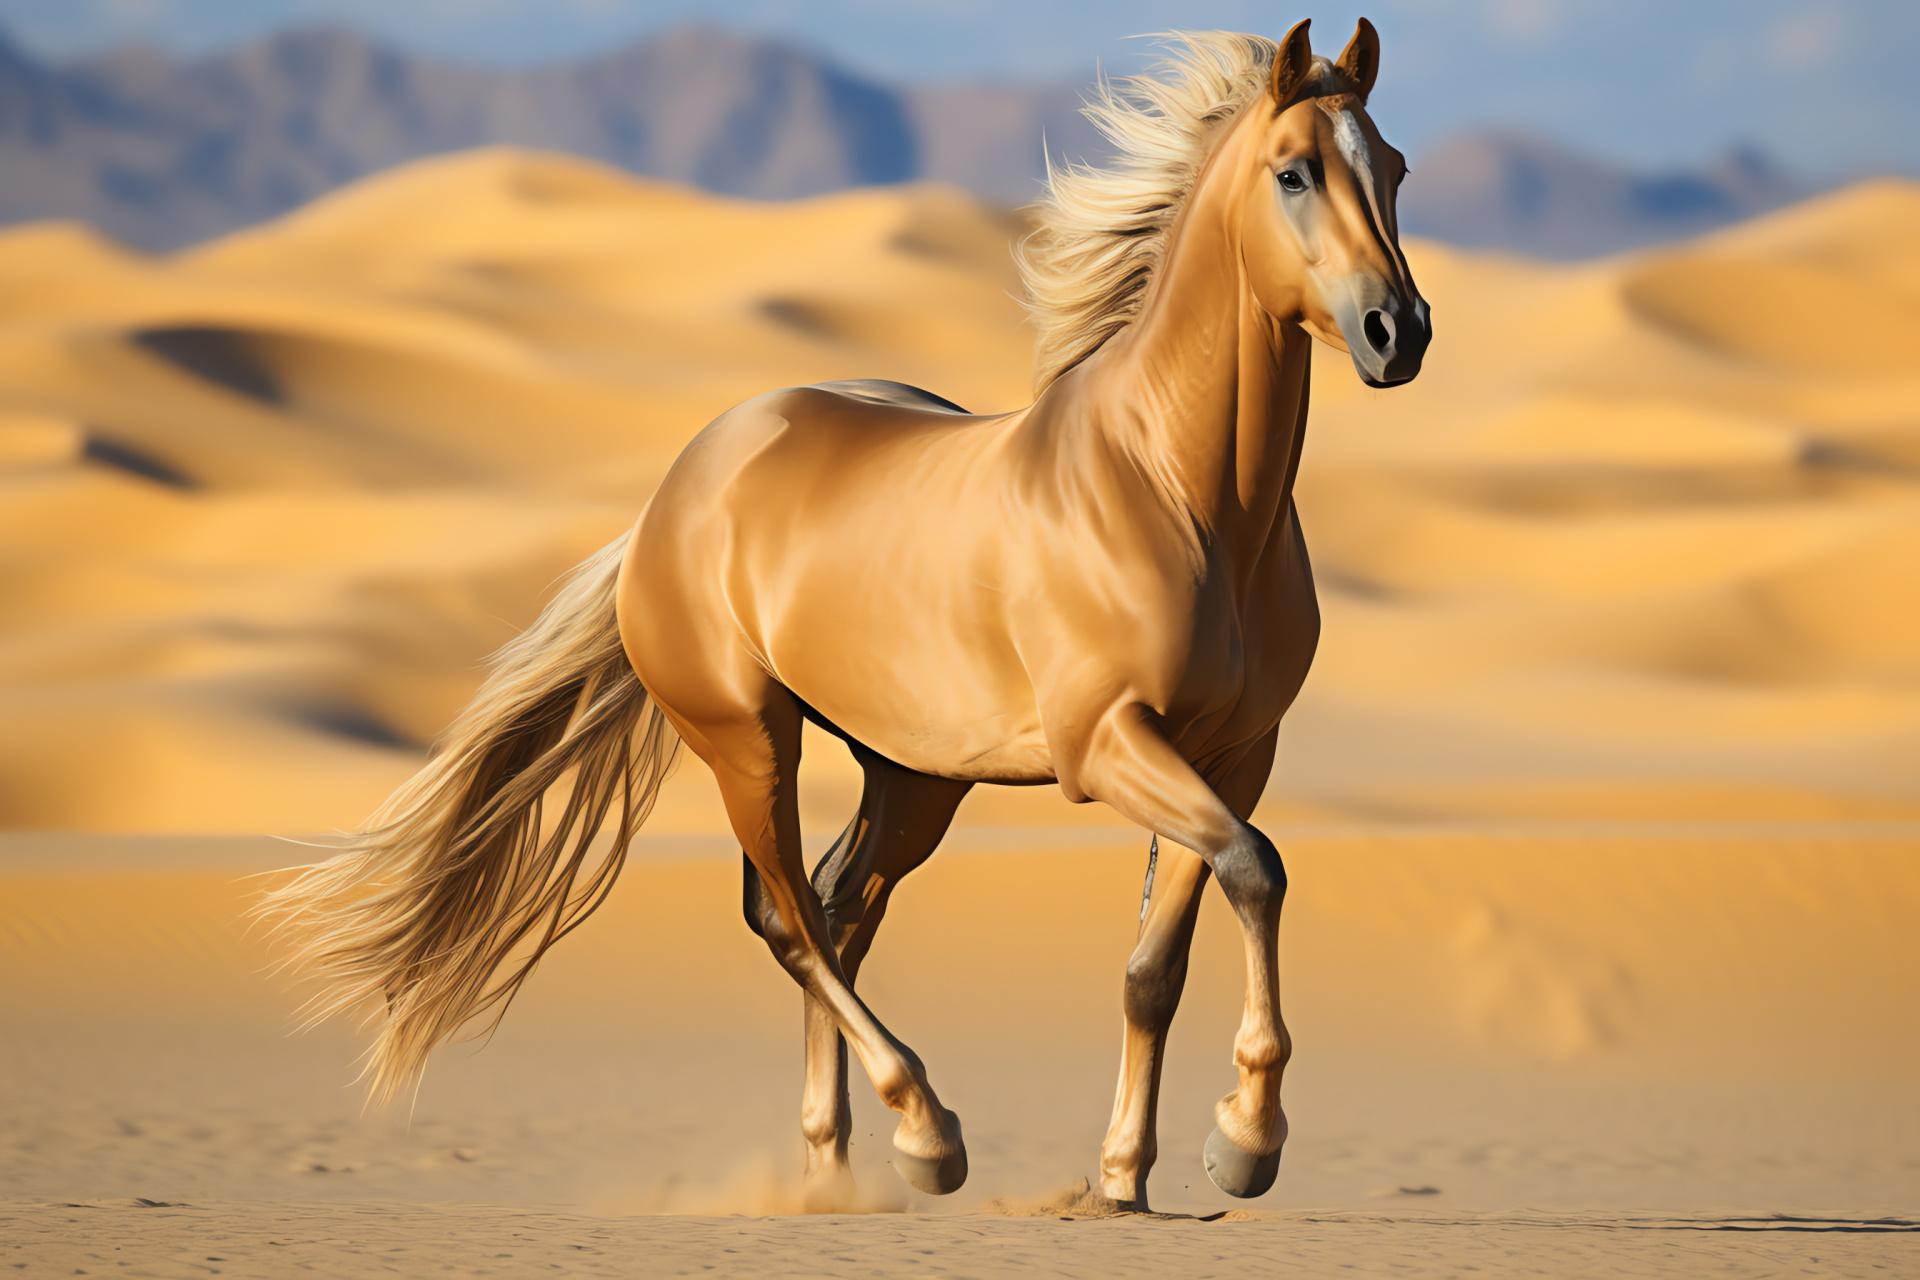 Arabian Horse, Equus ferus caballus, Desert steed, Equestrian grace, Swift gallop, HD Desktop Image